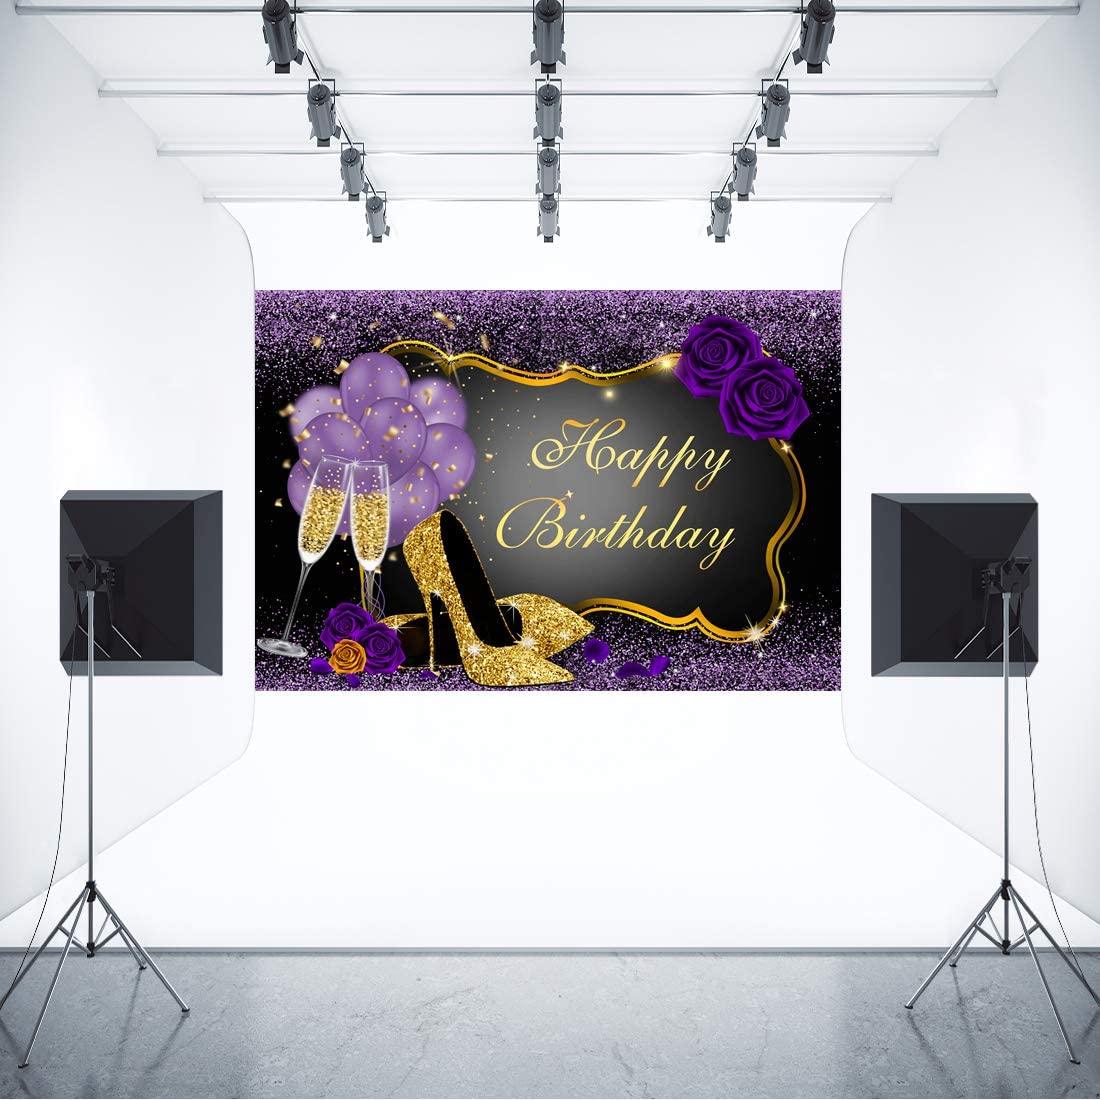 Happy Birthday Typography High Heel Greeting Card | Zazzle